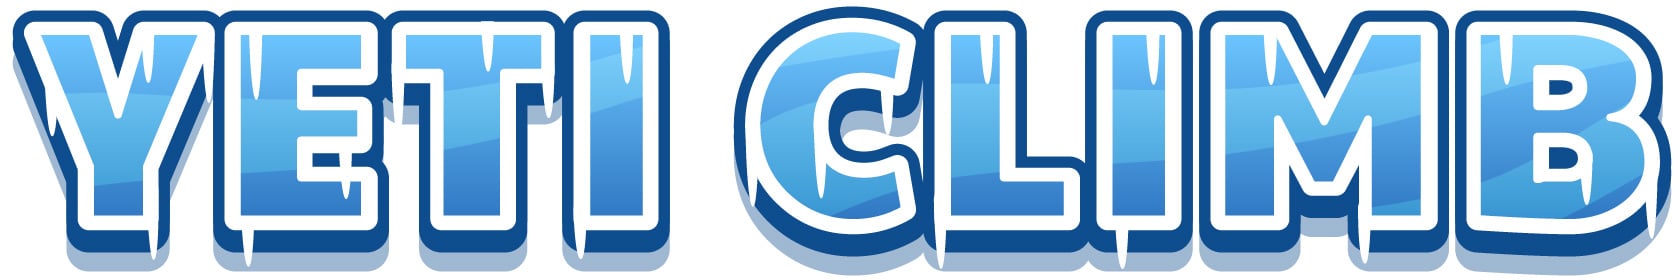 Image of Yeti Climb logo